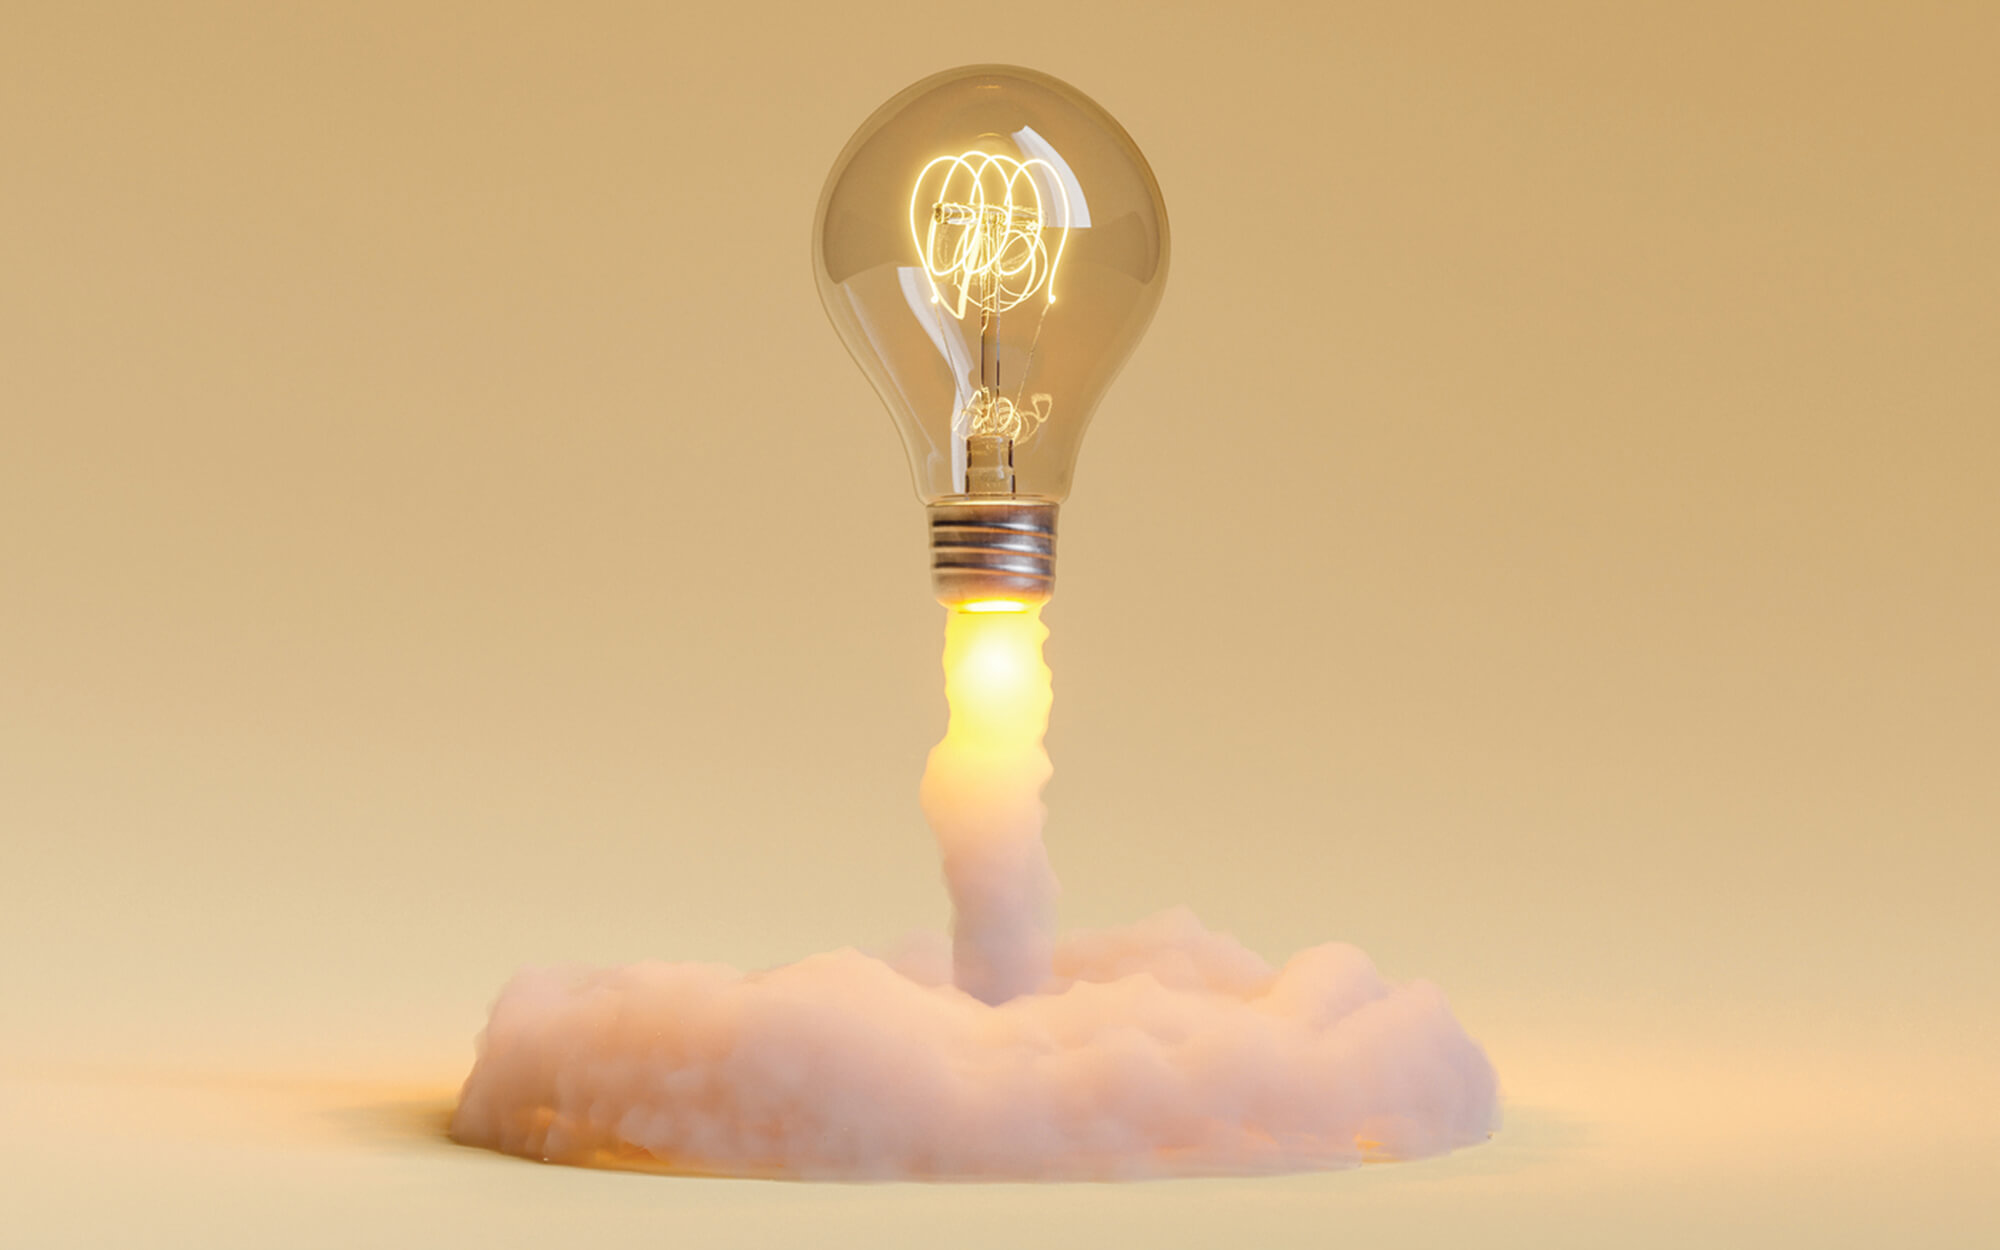 lightbulb photo illustration